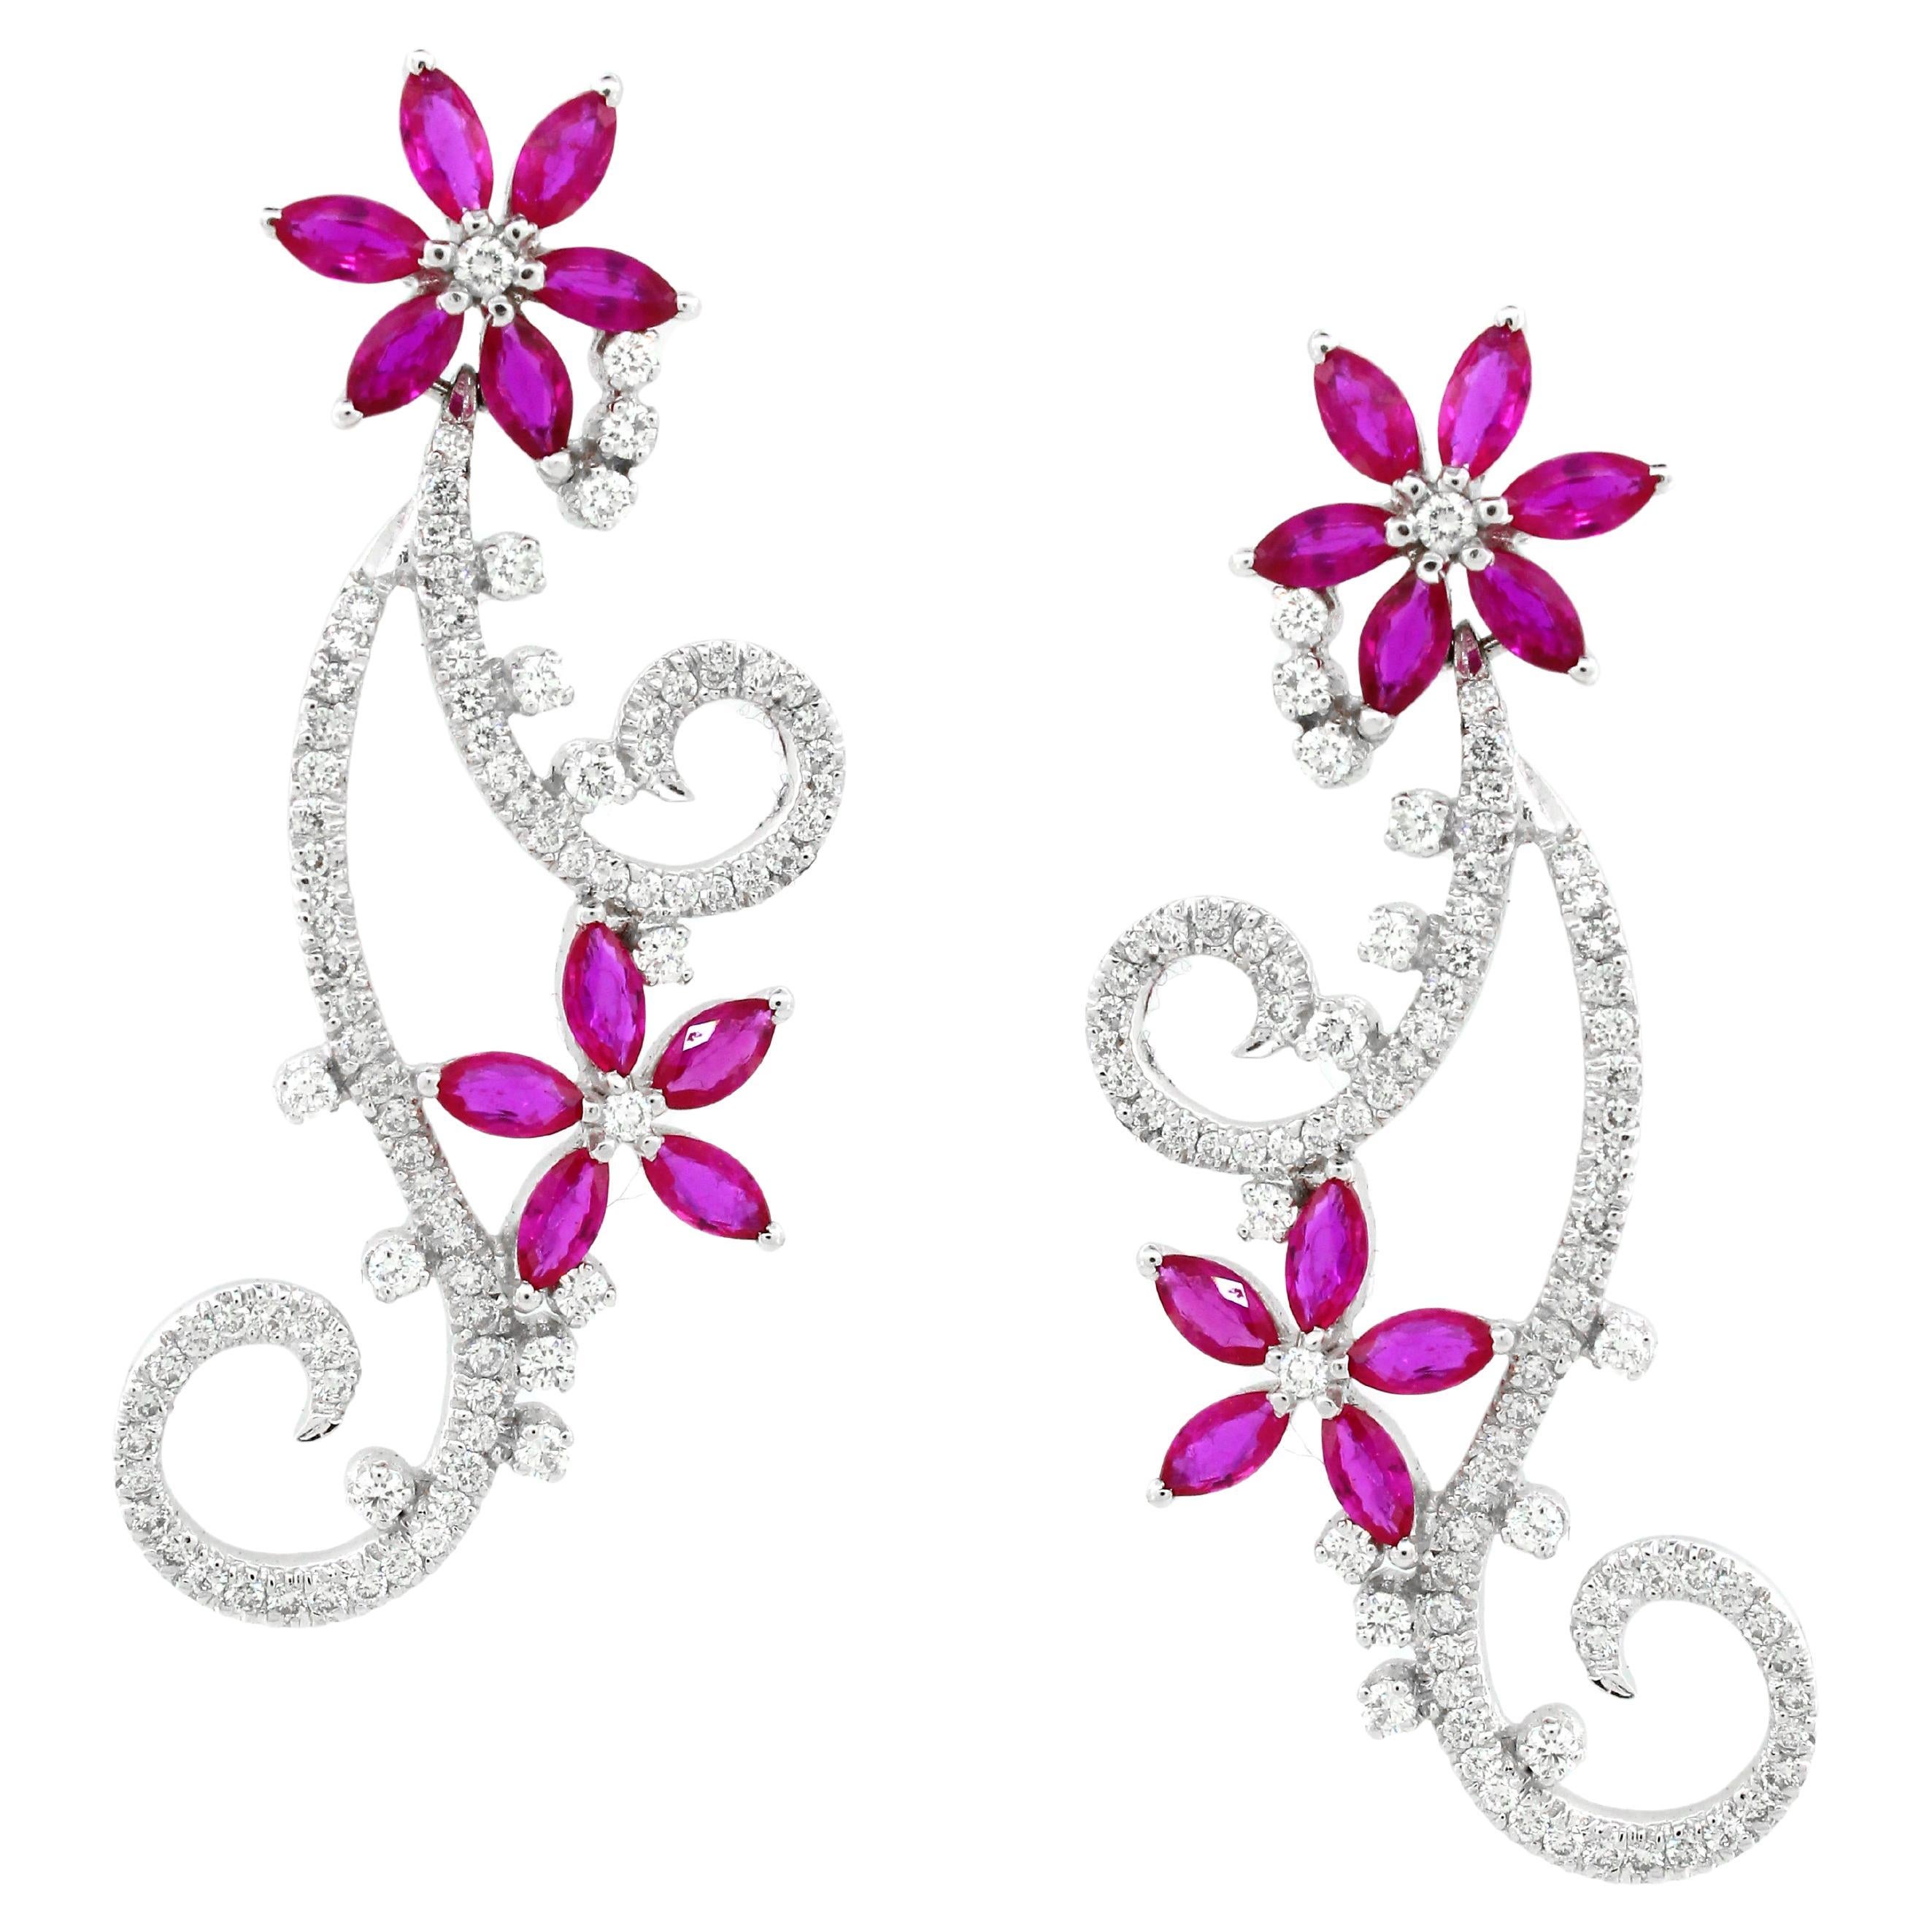 3.53 carats of Ruby earrings 